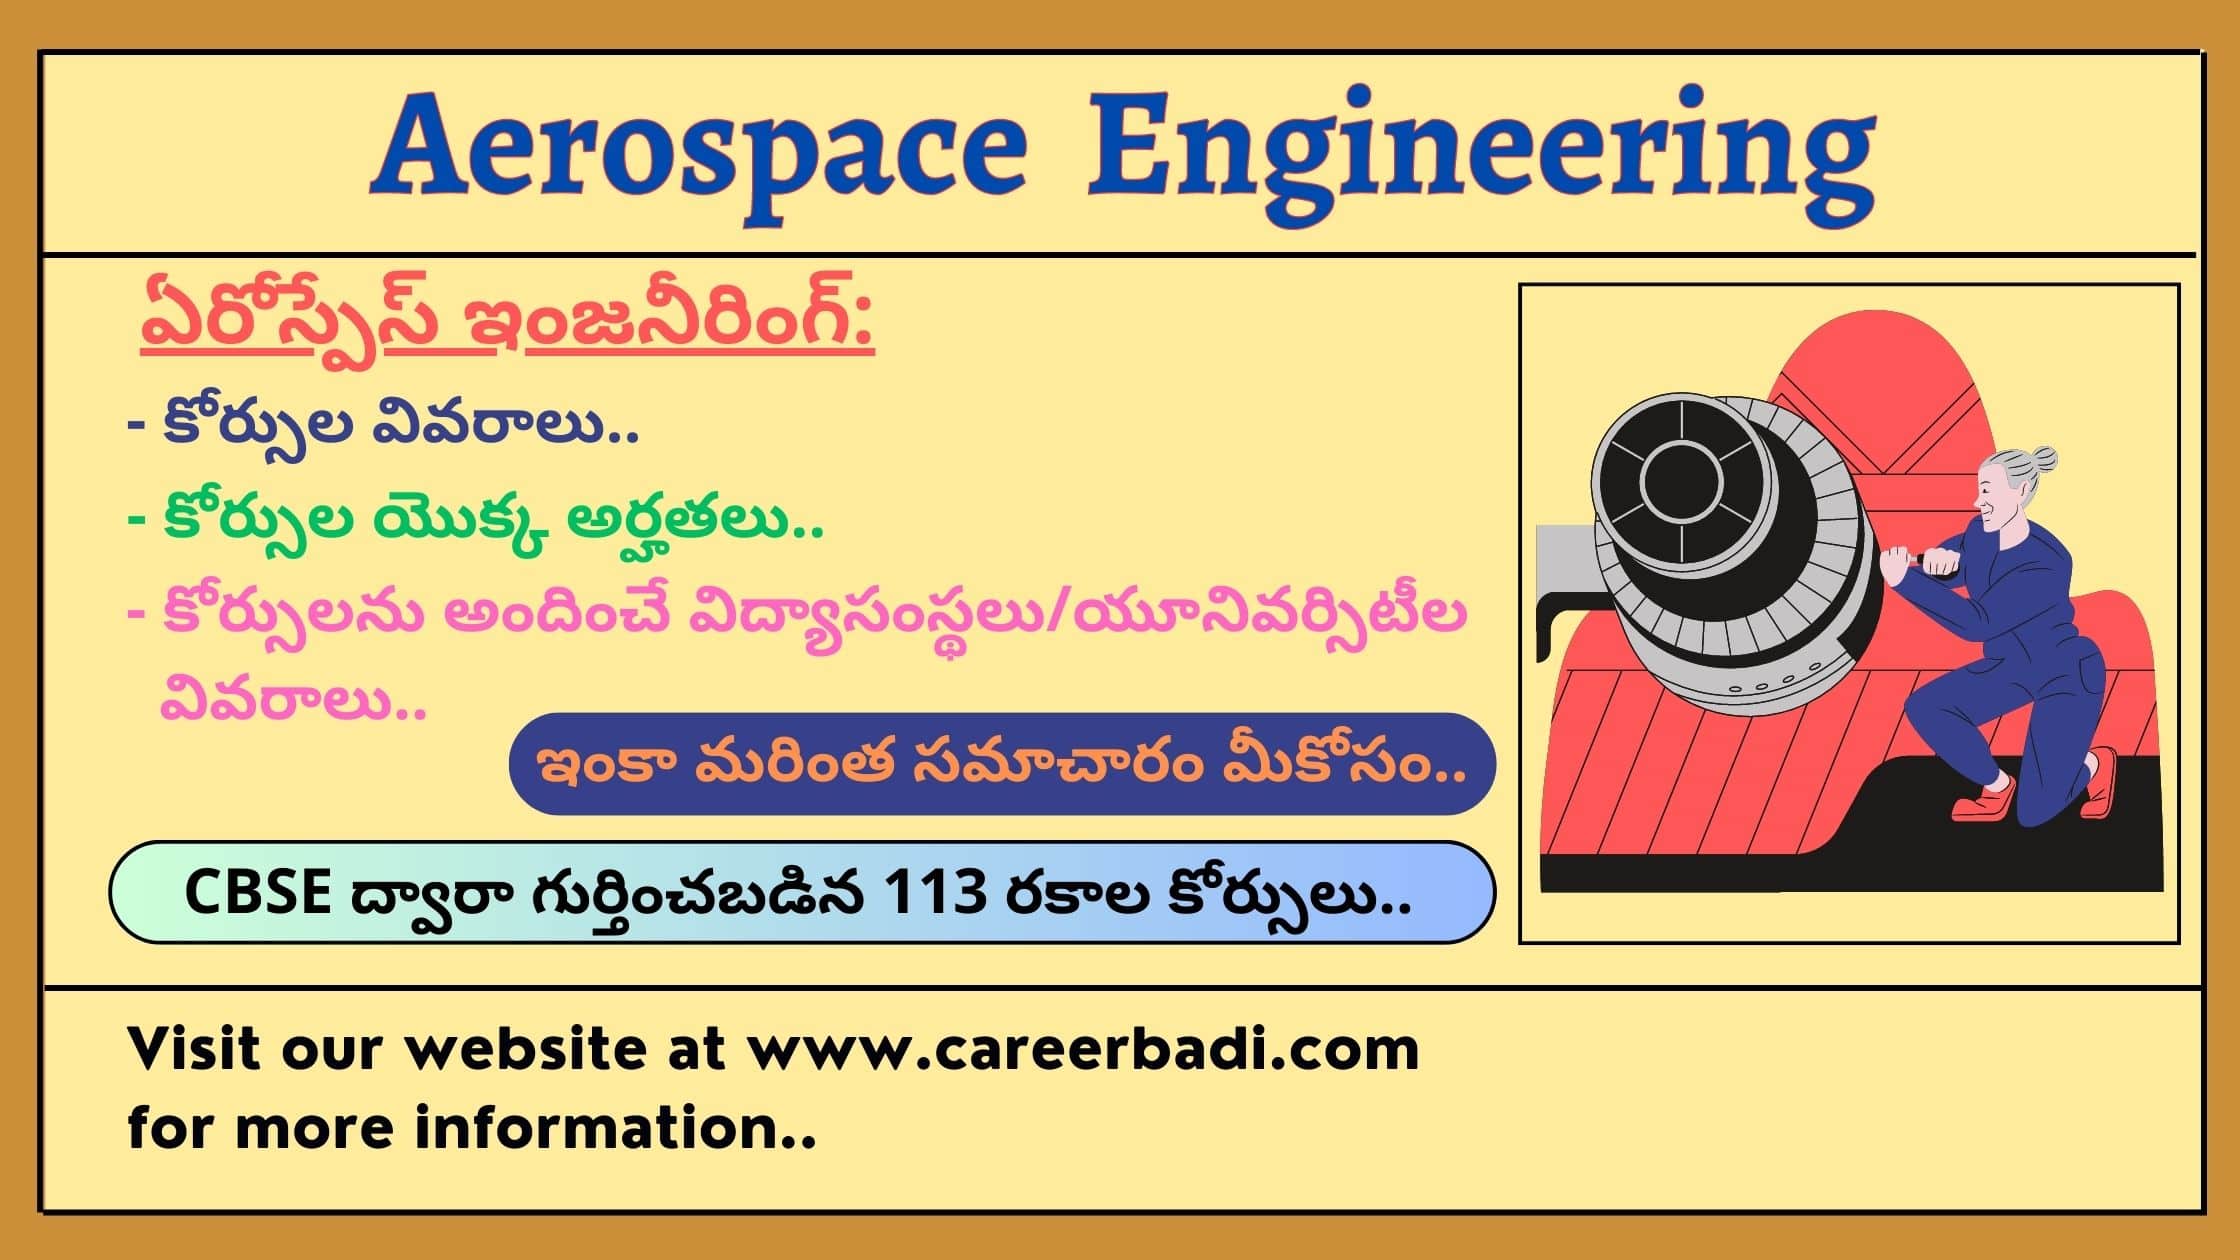 Aerospace Engineering Course Details in Telugu